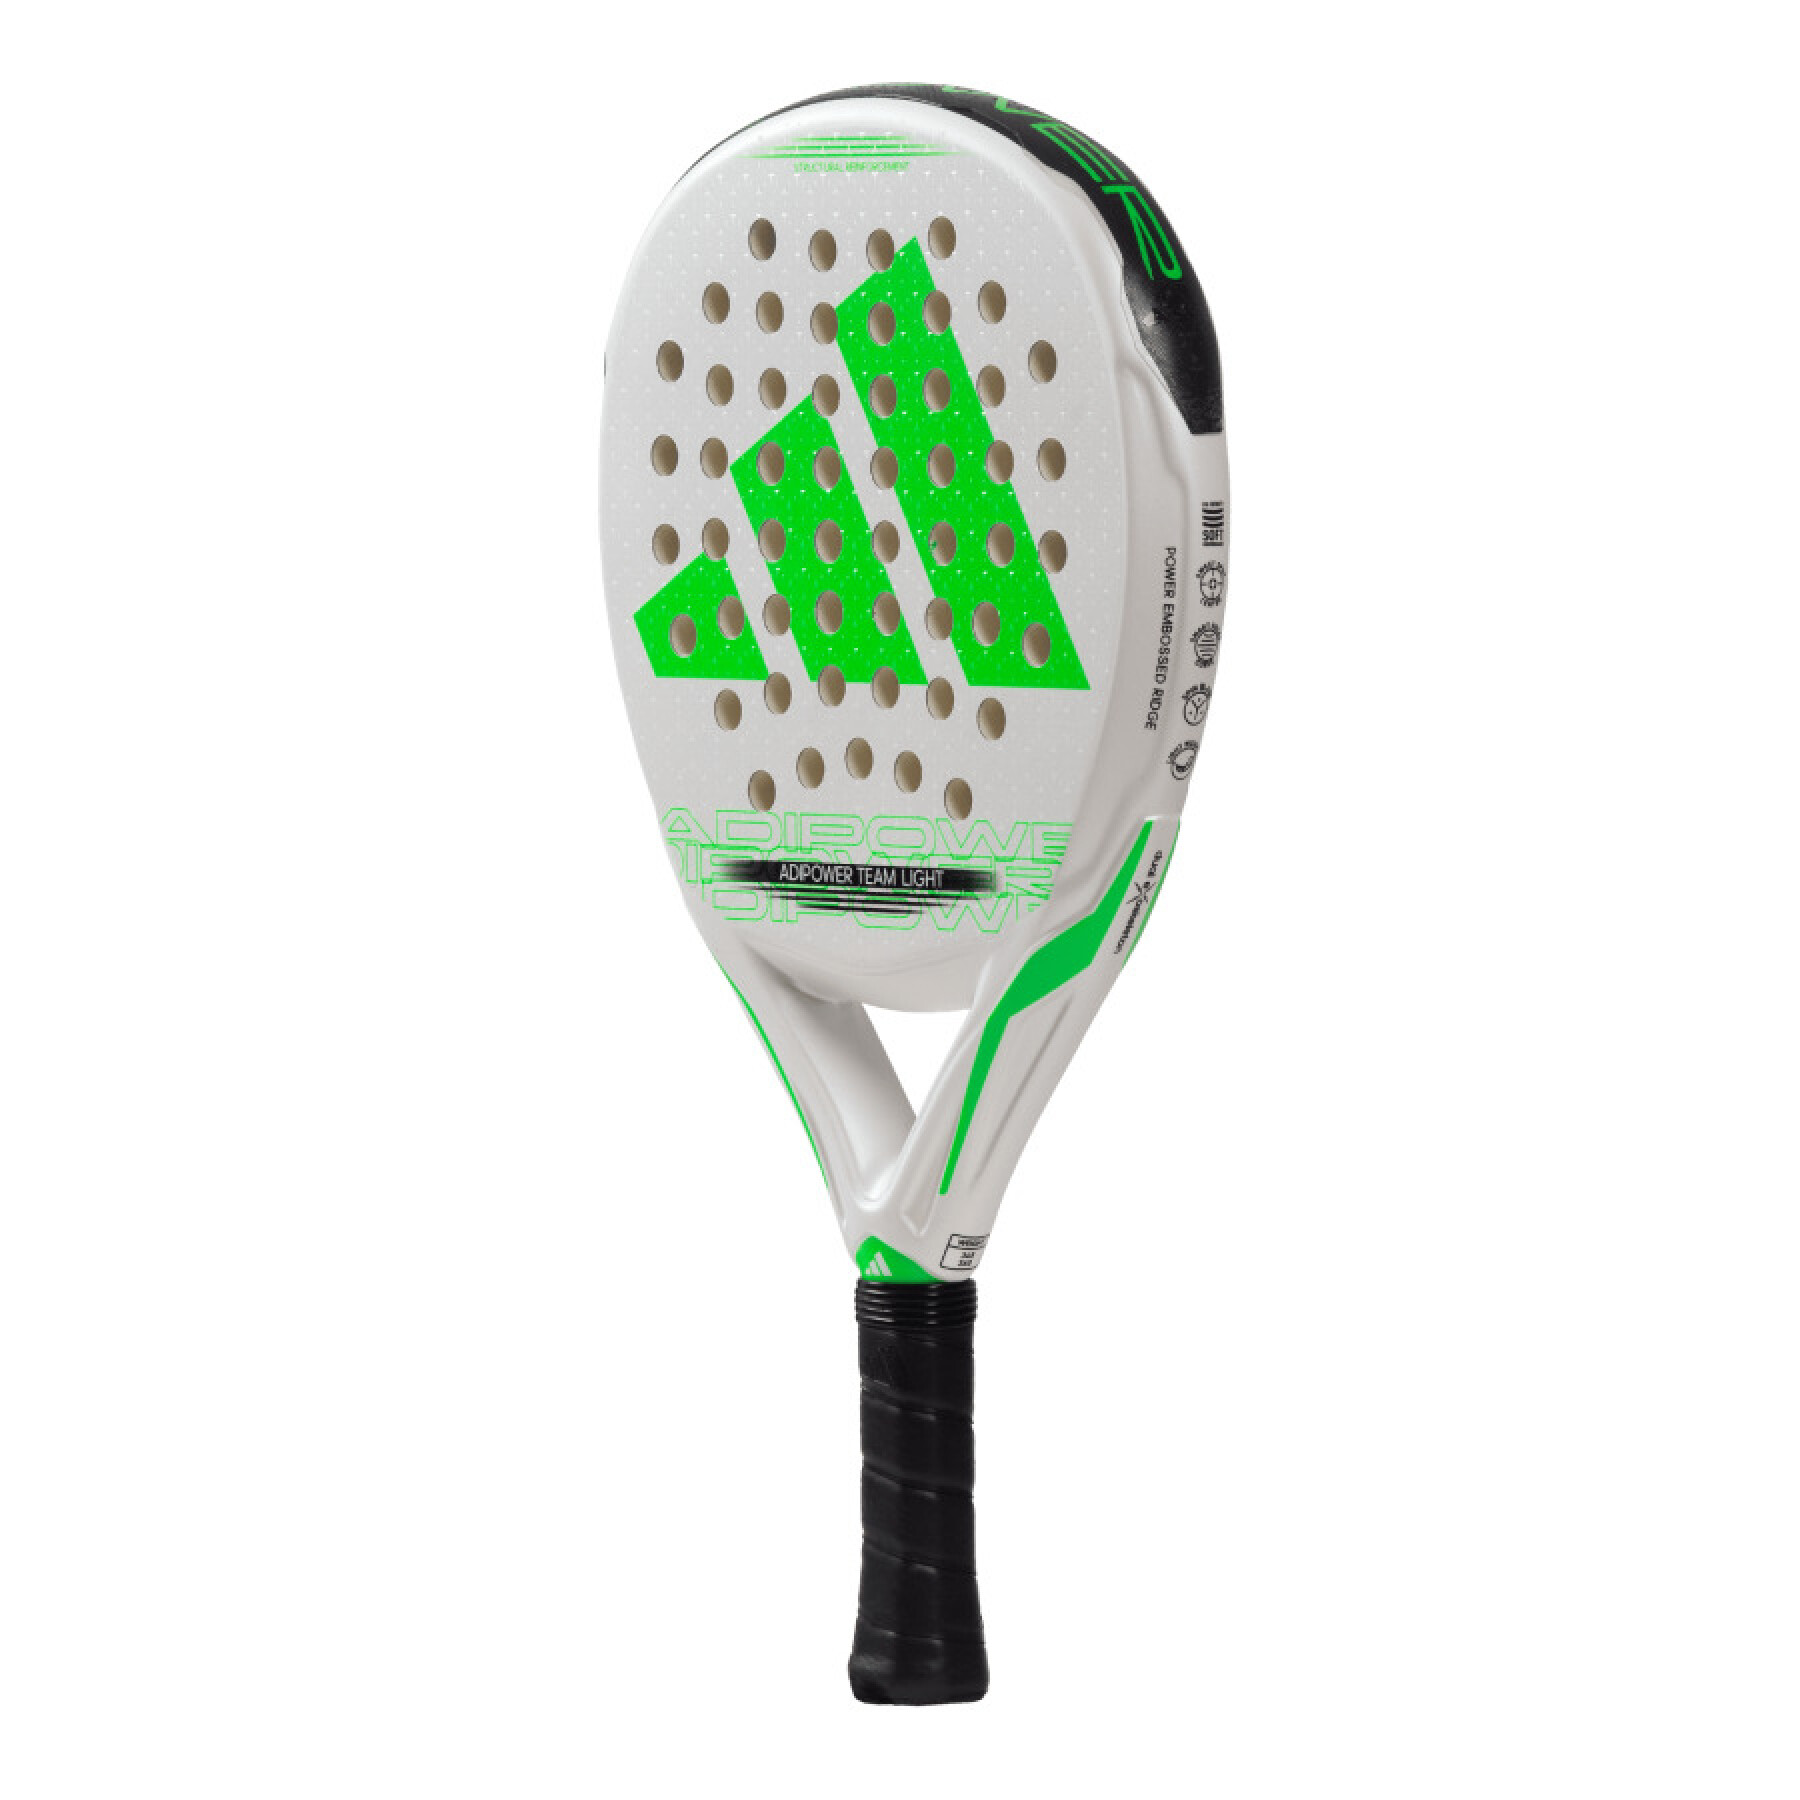 Paddle racket adidas Adipower Team Light 3.3